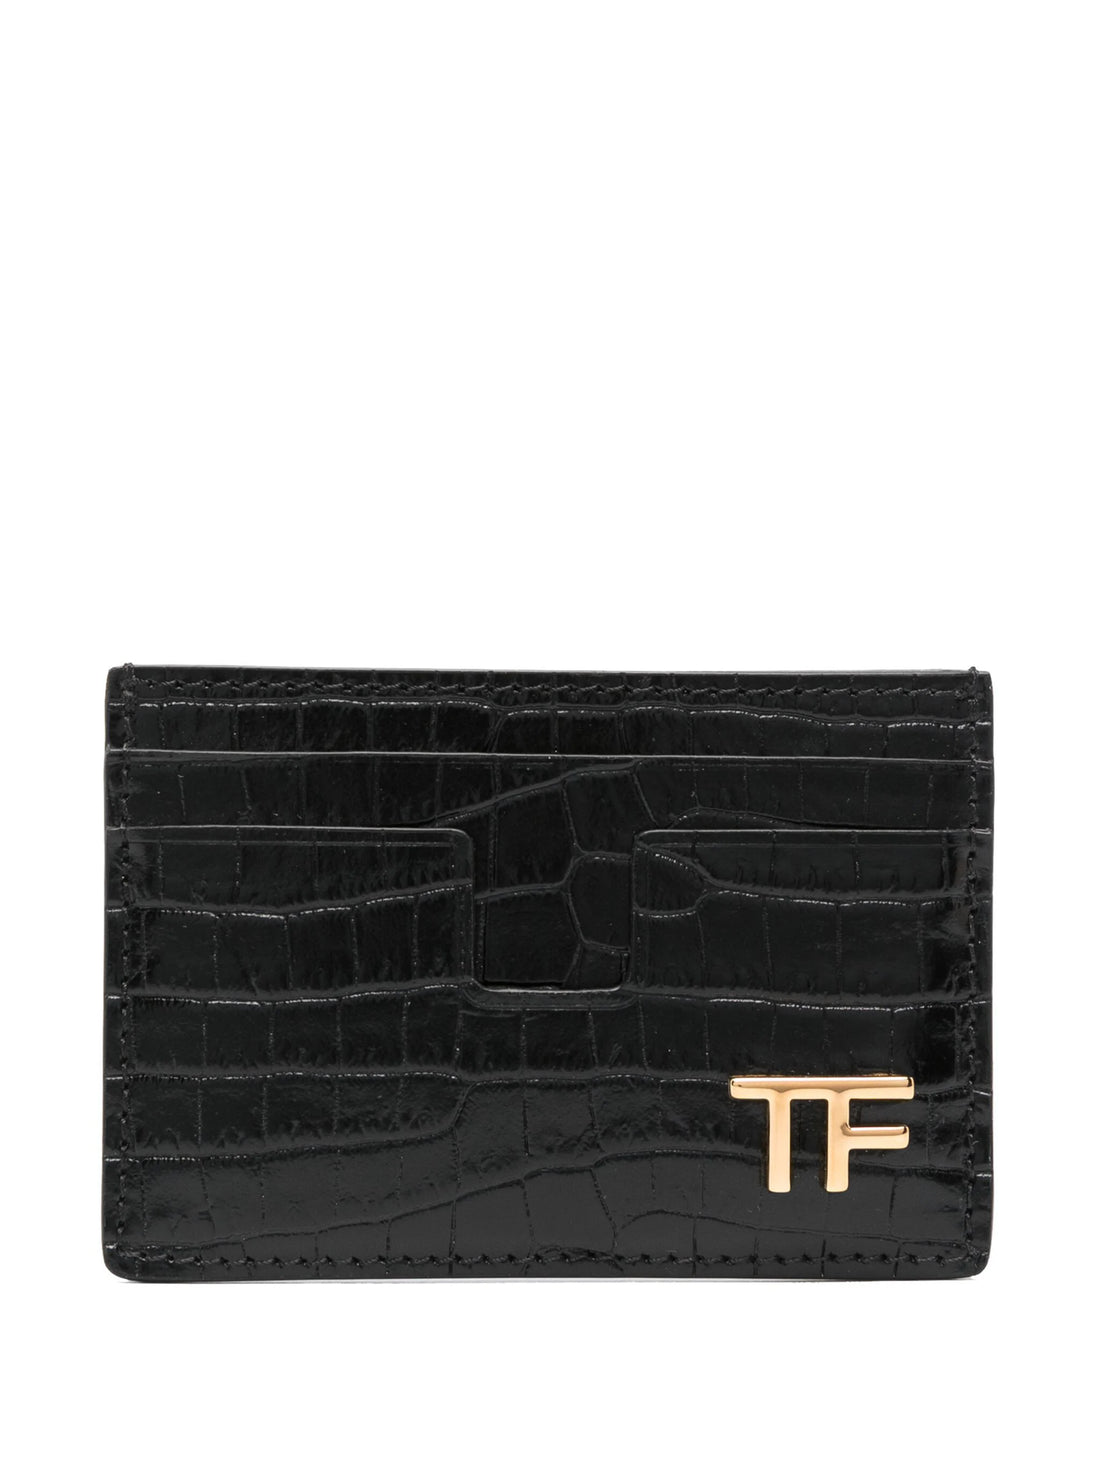 TOM FORD TF Logo Crocodile Leather Card Holder Black/Gold - MAISONDEFASHION.COM